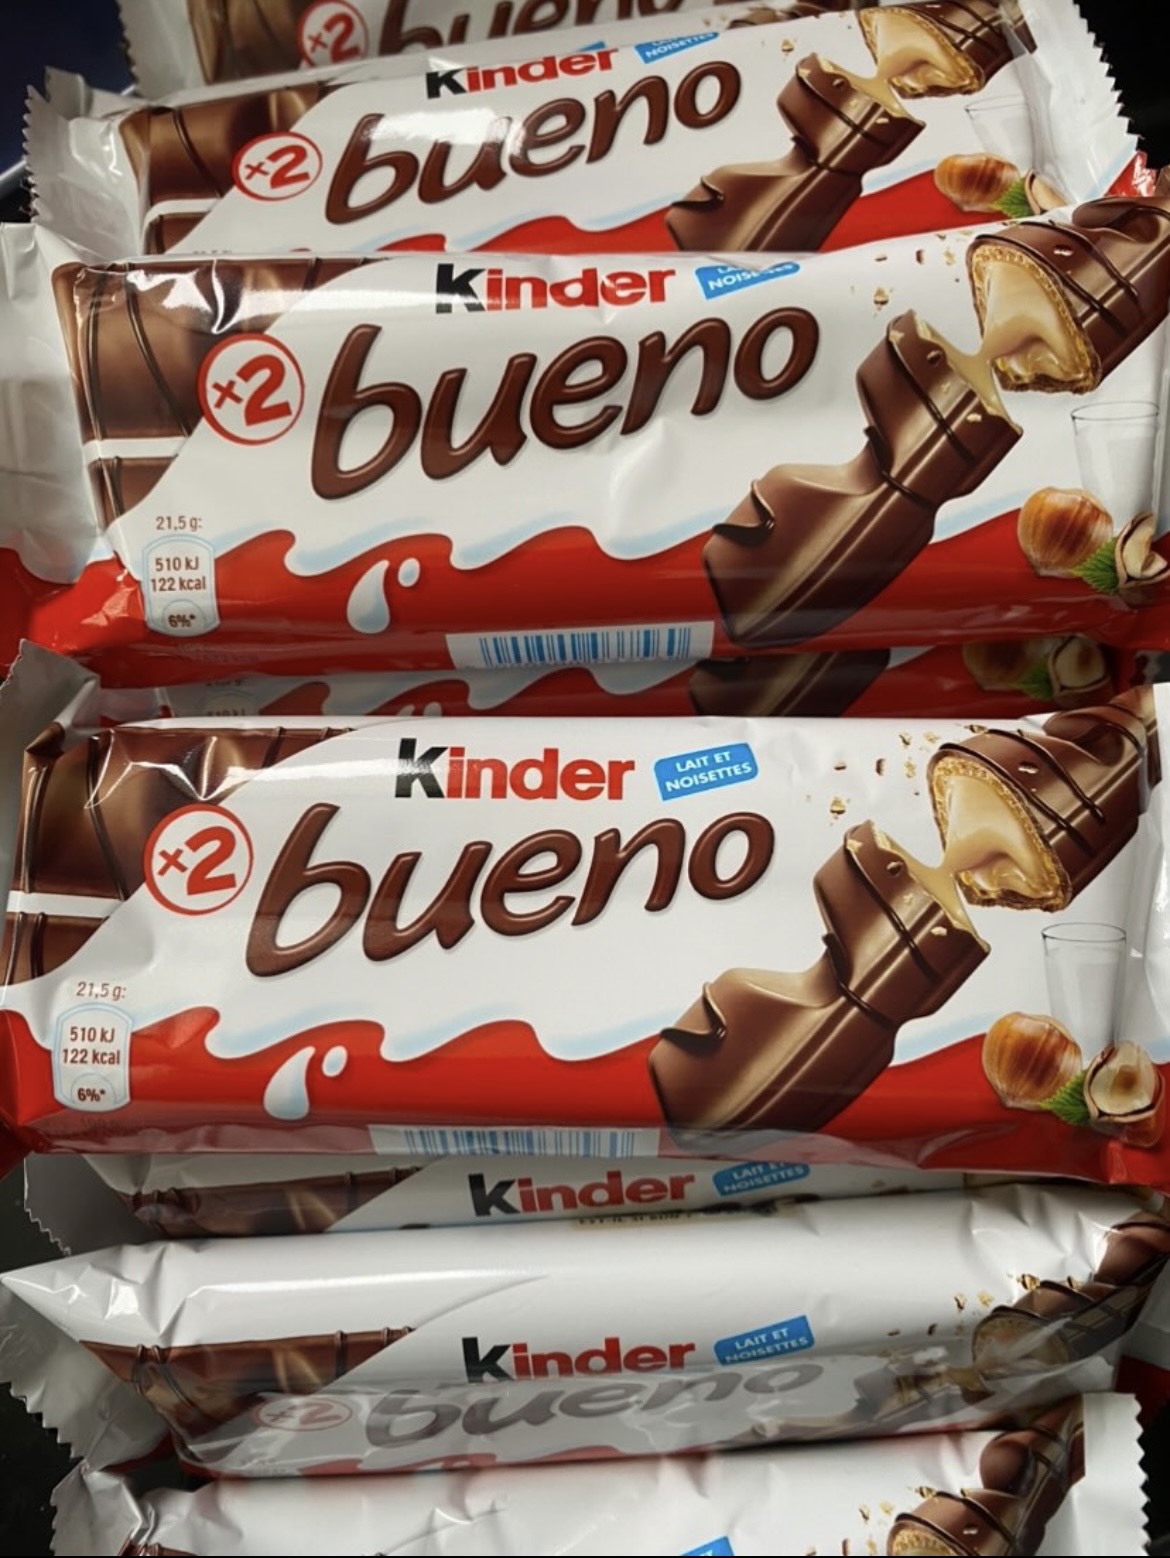 Vente de produits Kinder Bueno en France